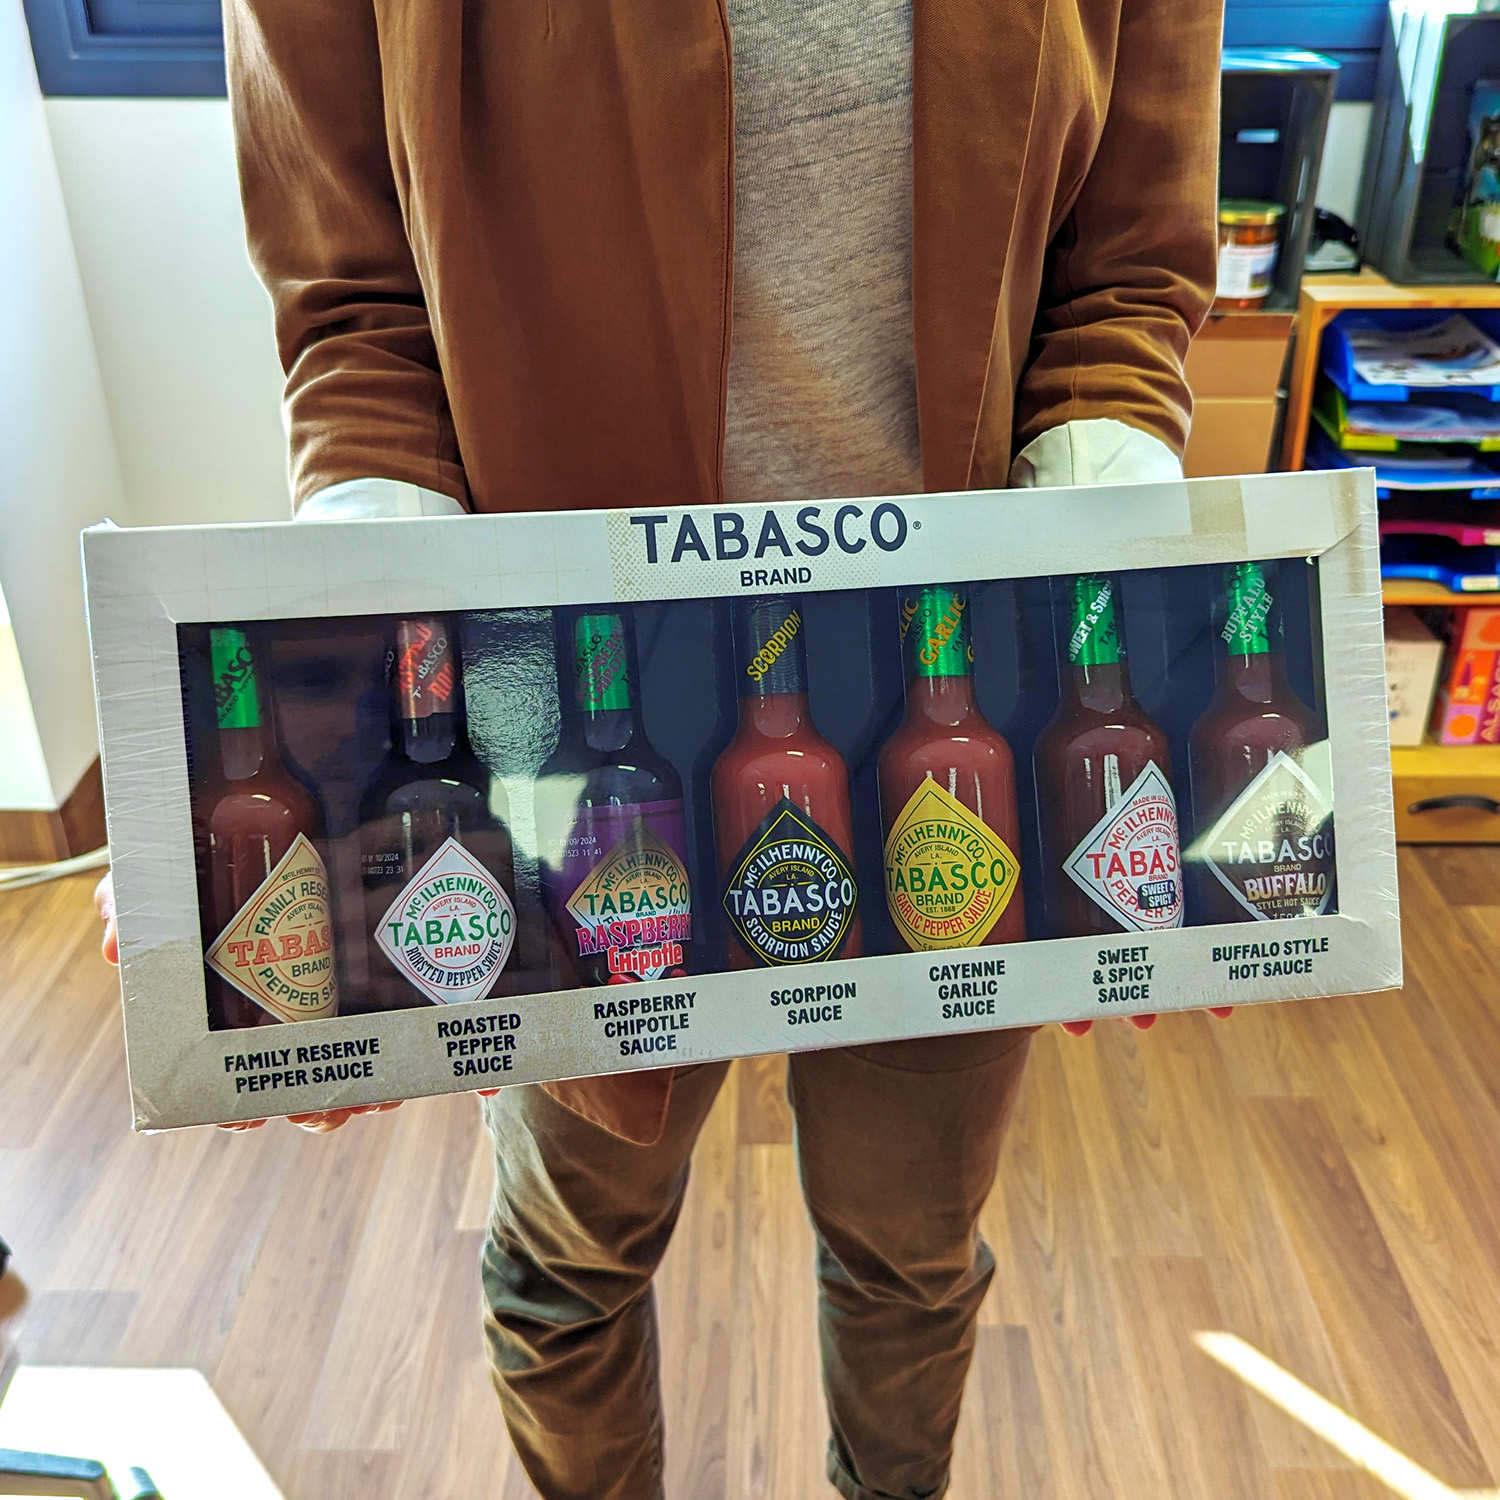 Coffret Tabasco Brand Gift - 5 saveurs x 60ml - Mc Ilhenny - Tabasco brand